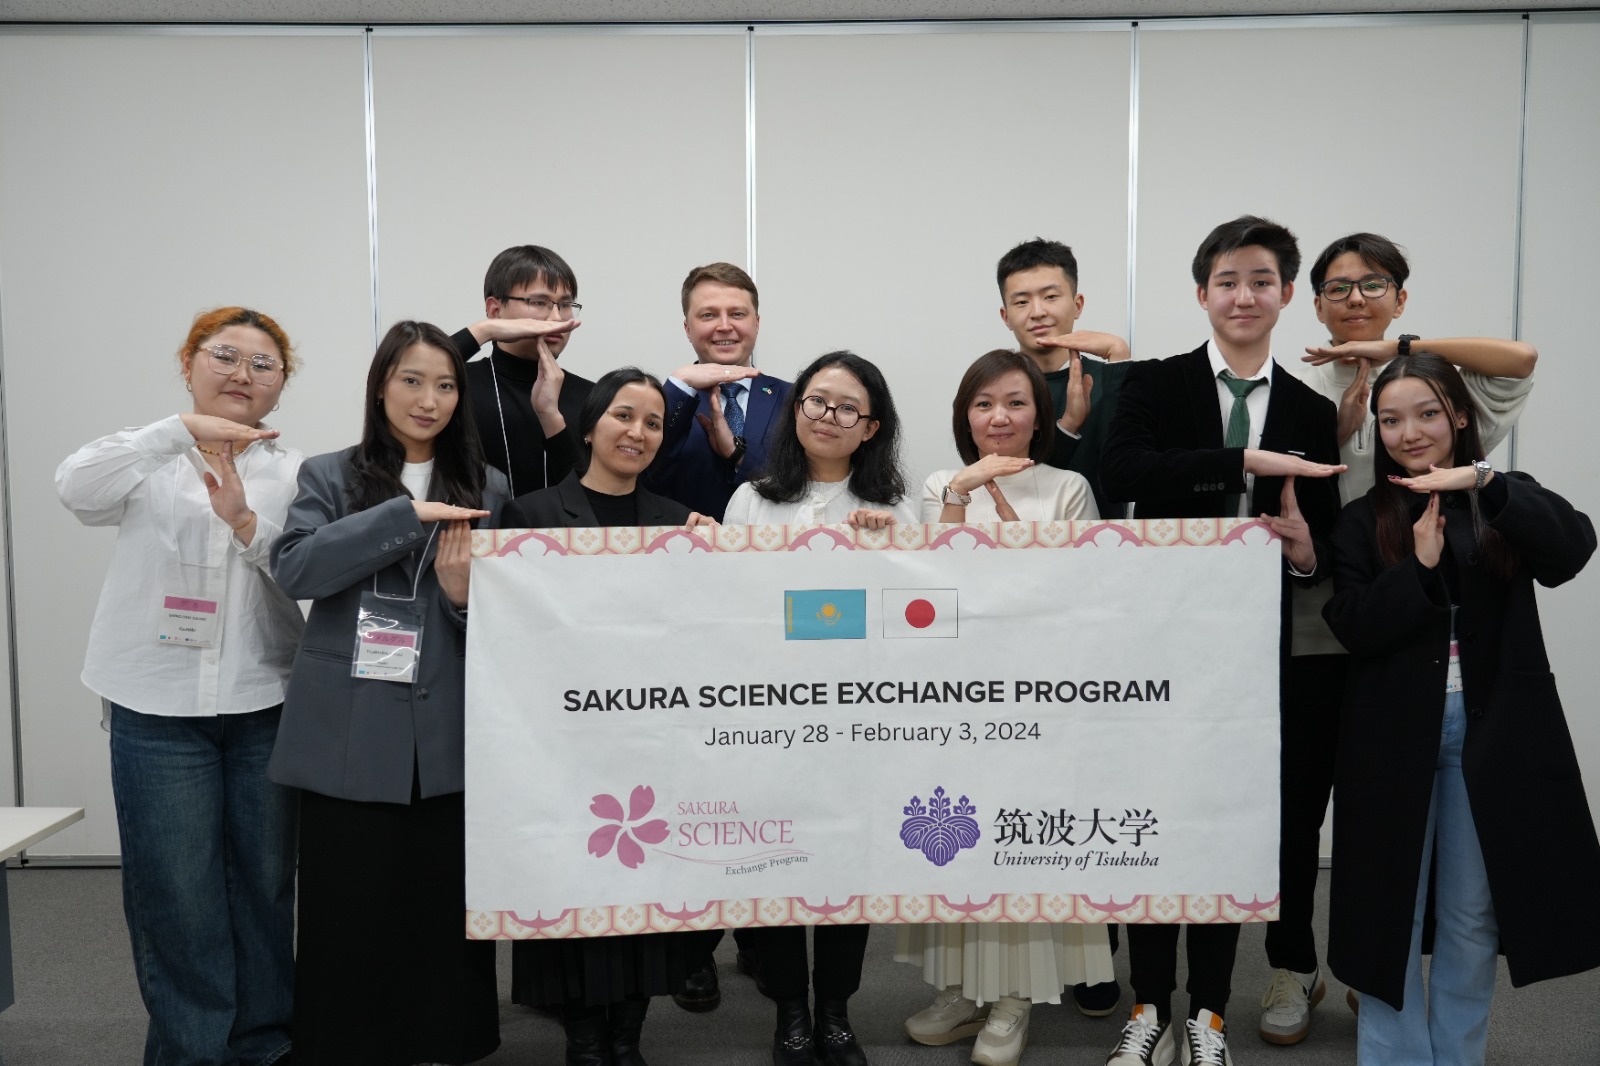 Sakura Science exchange program